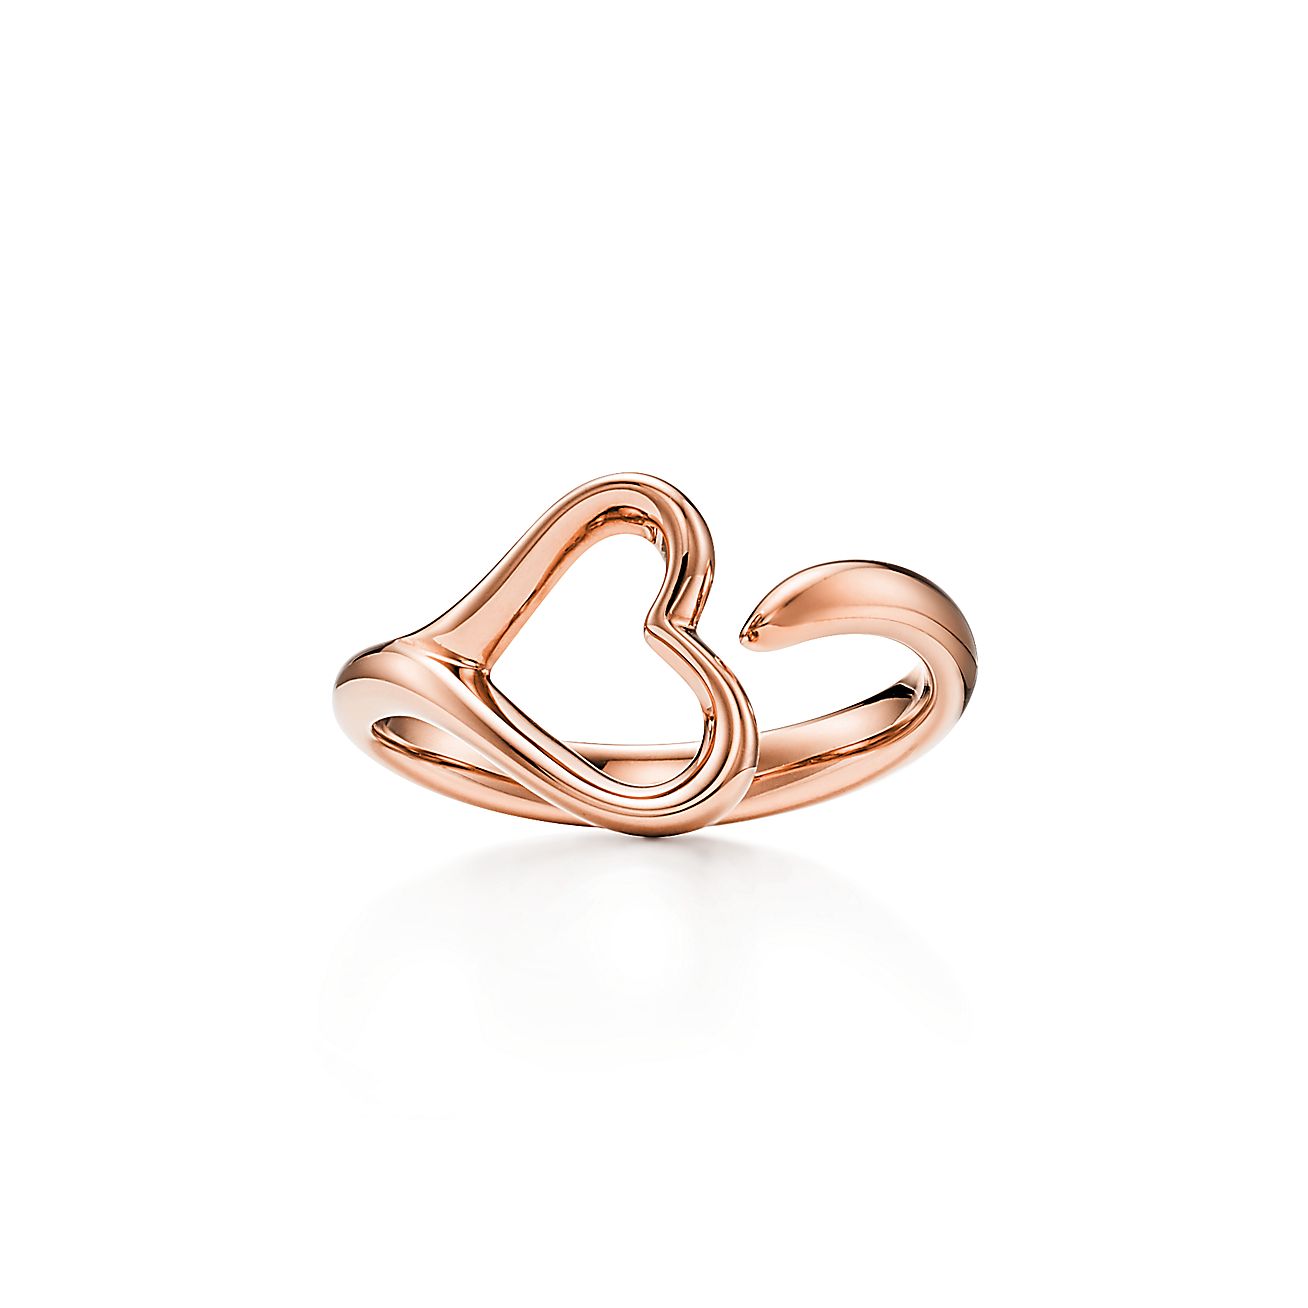 Elsa Peretti™ Open Heart ring in 18k rose gold, small.